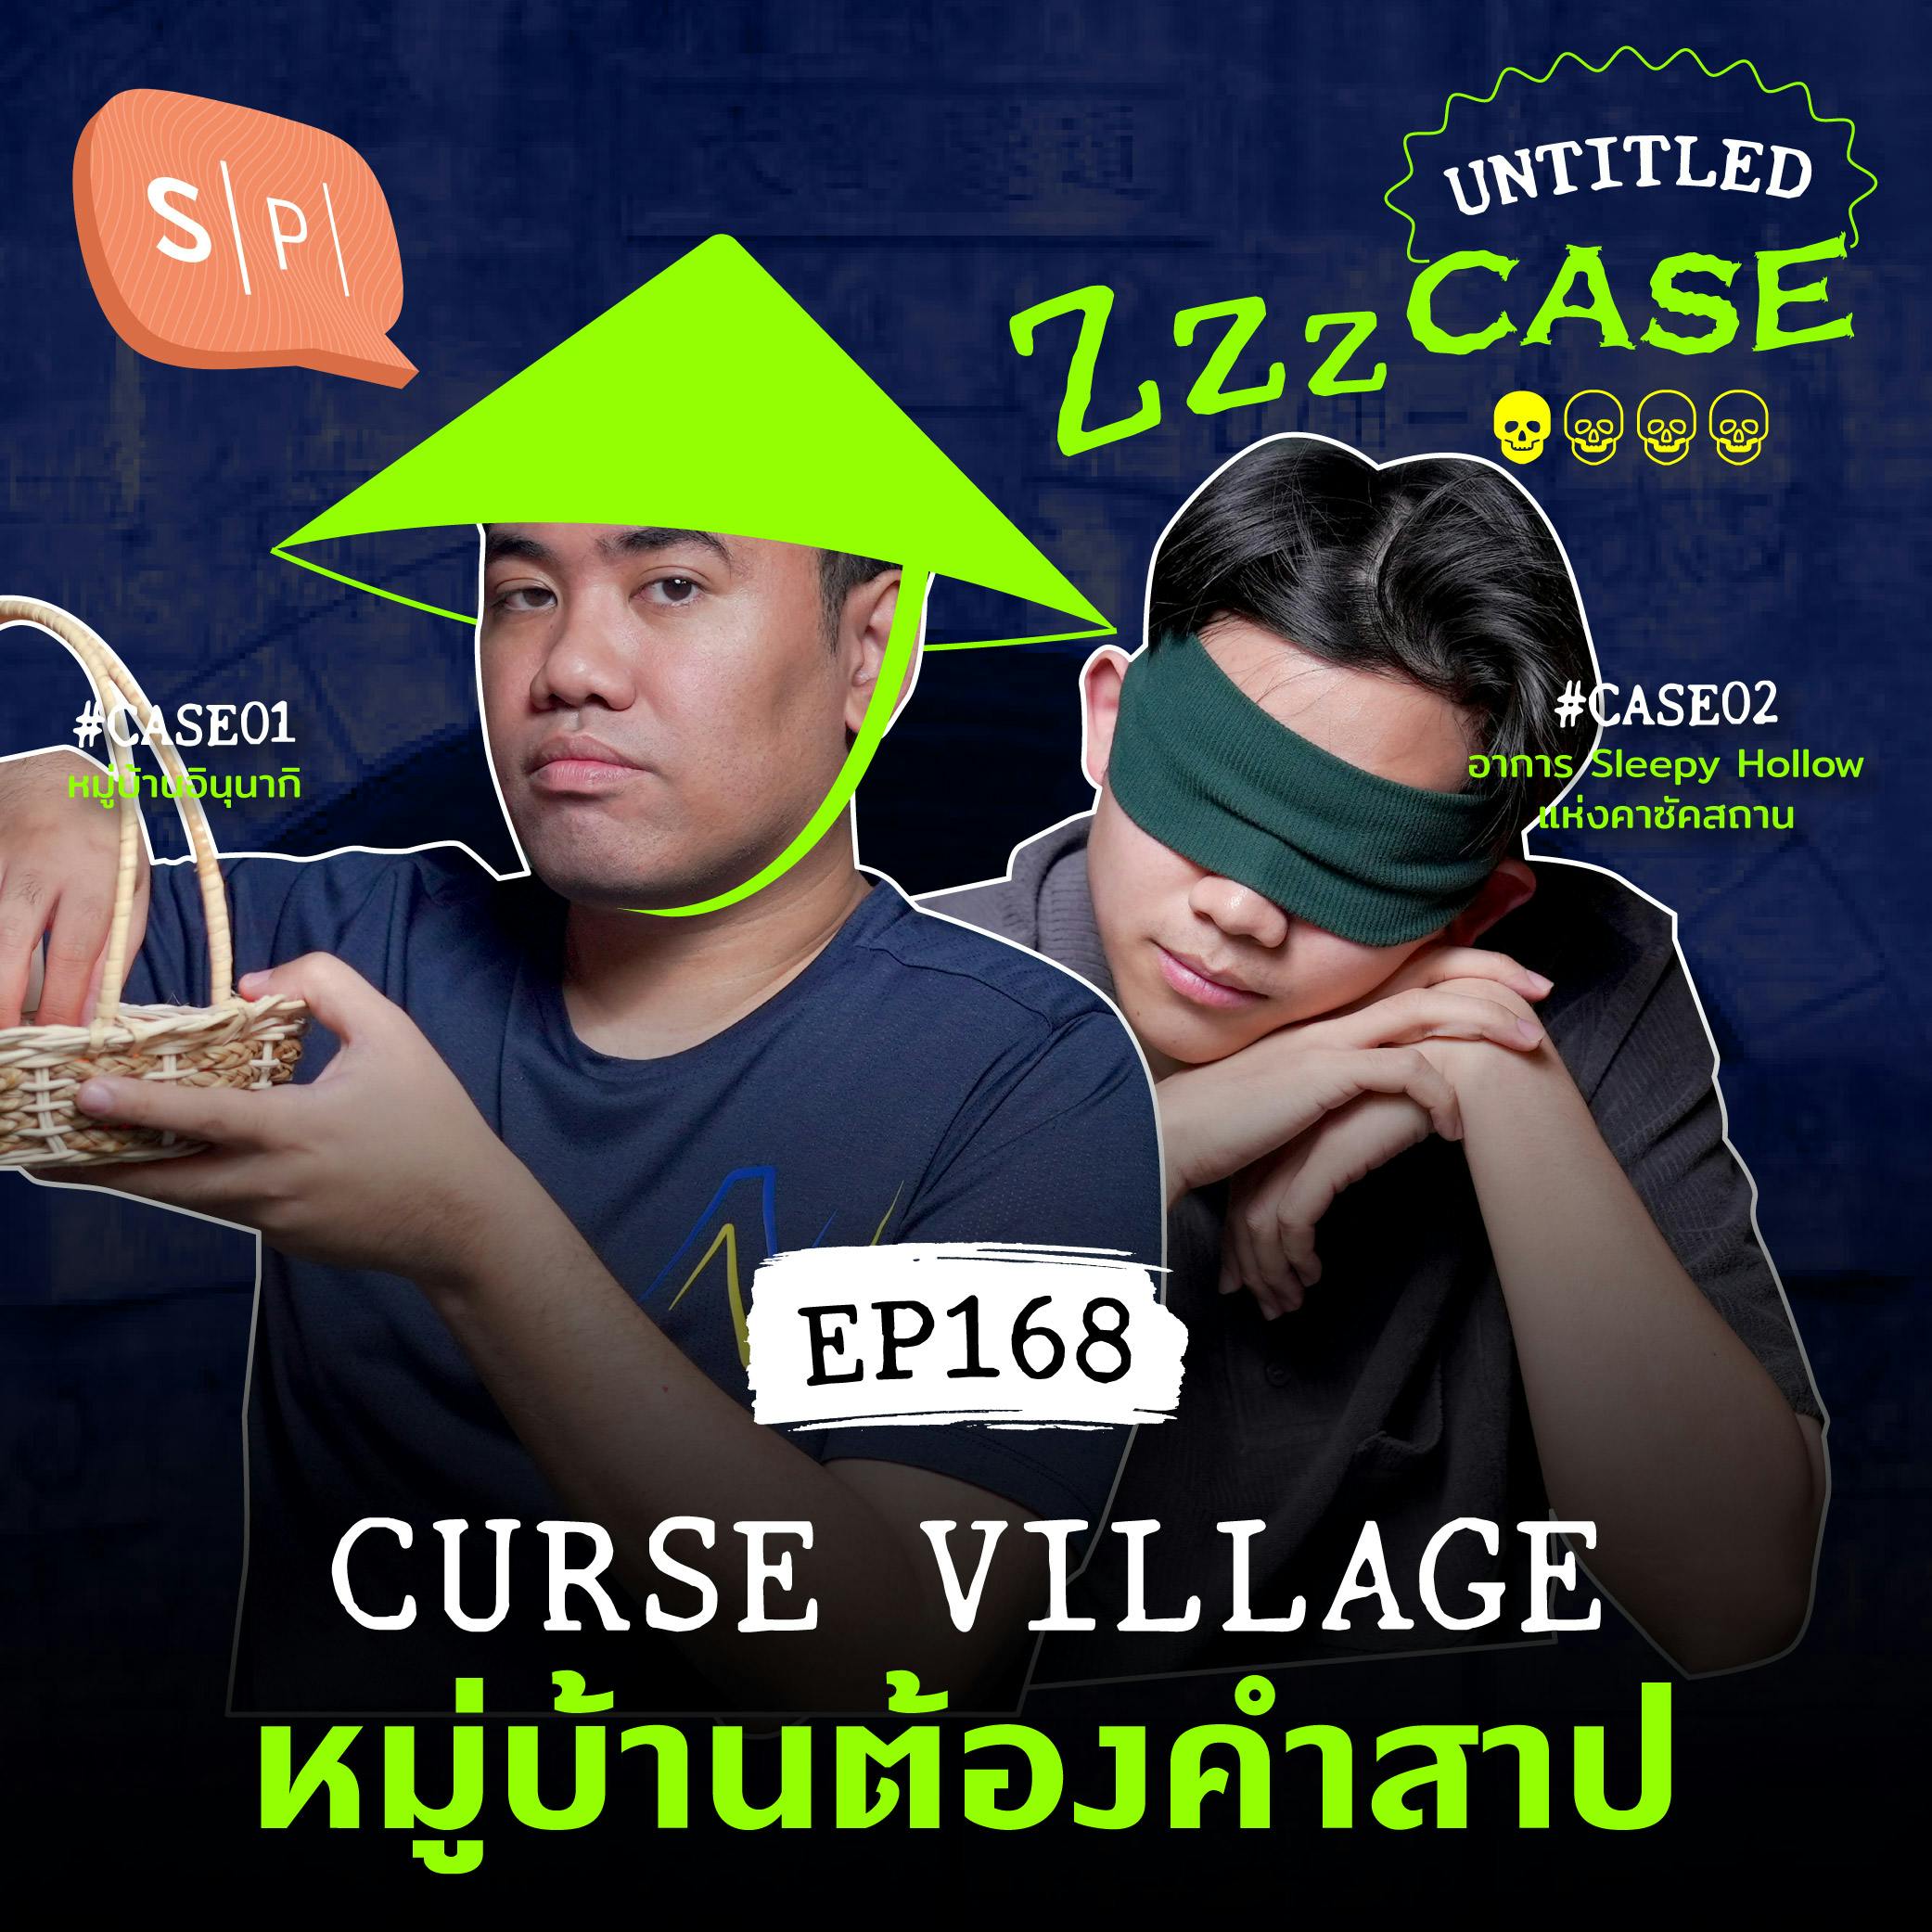 Cursed Village หมู่บ้านต้องสาป | Untitled Case EP168